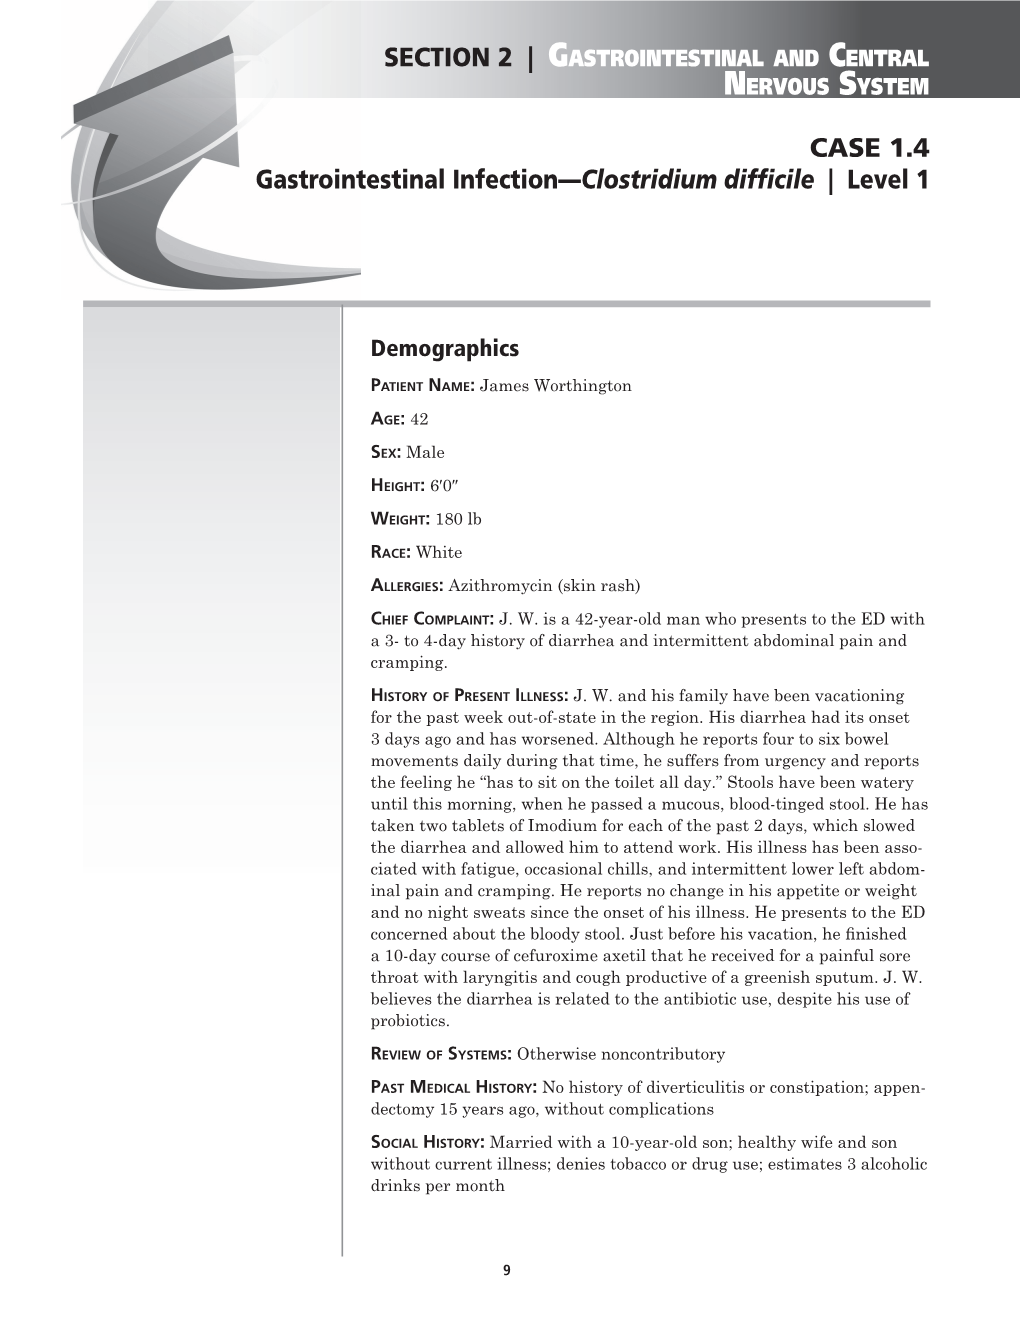 CASE 1.4 Gastrointestinal Infection—Clostridium Difficile | Level 1